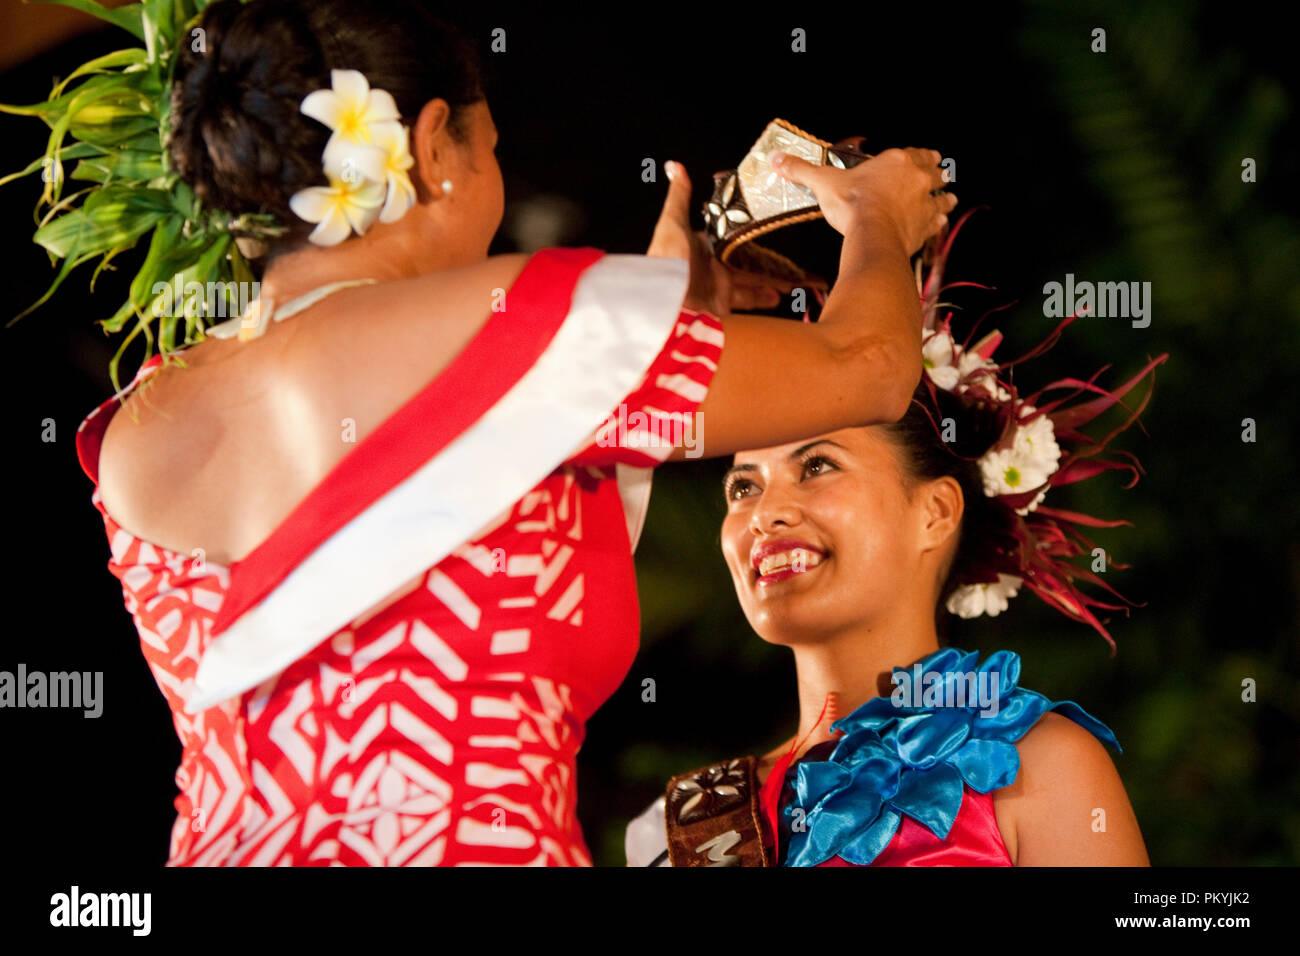 Janine Nicky Tuivaiti es coronada Miss Samoa en 2012 el certamen de belleza Miss Samoa. Foto de stock